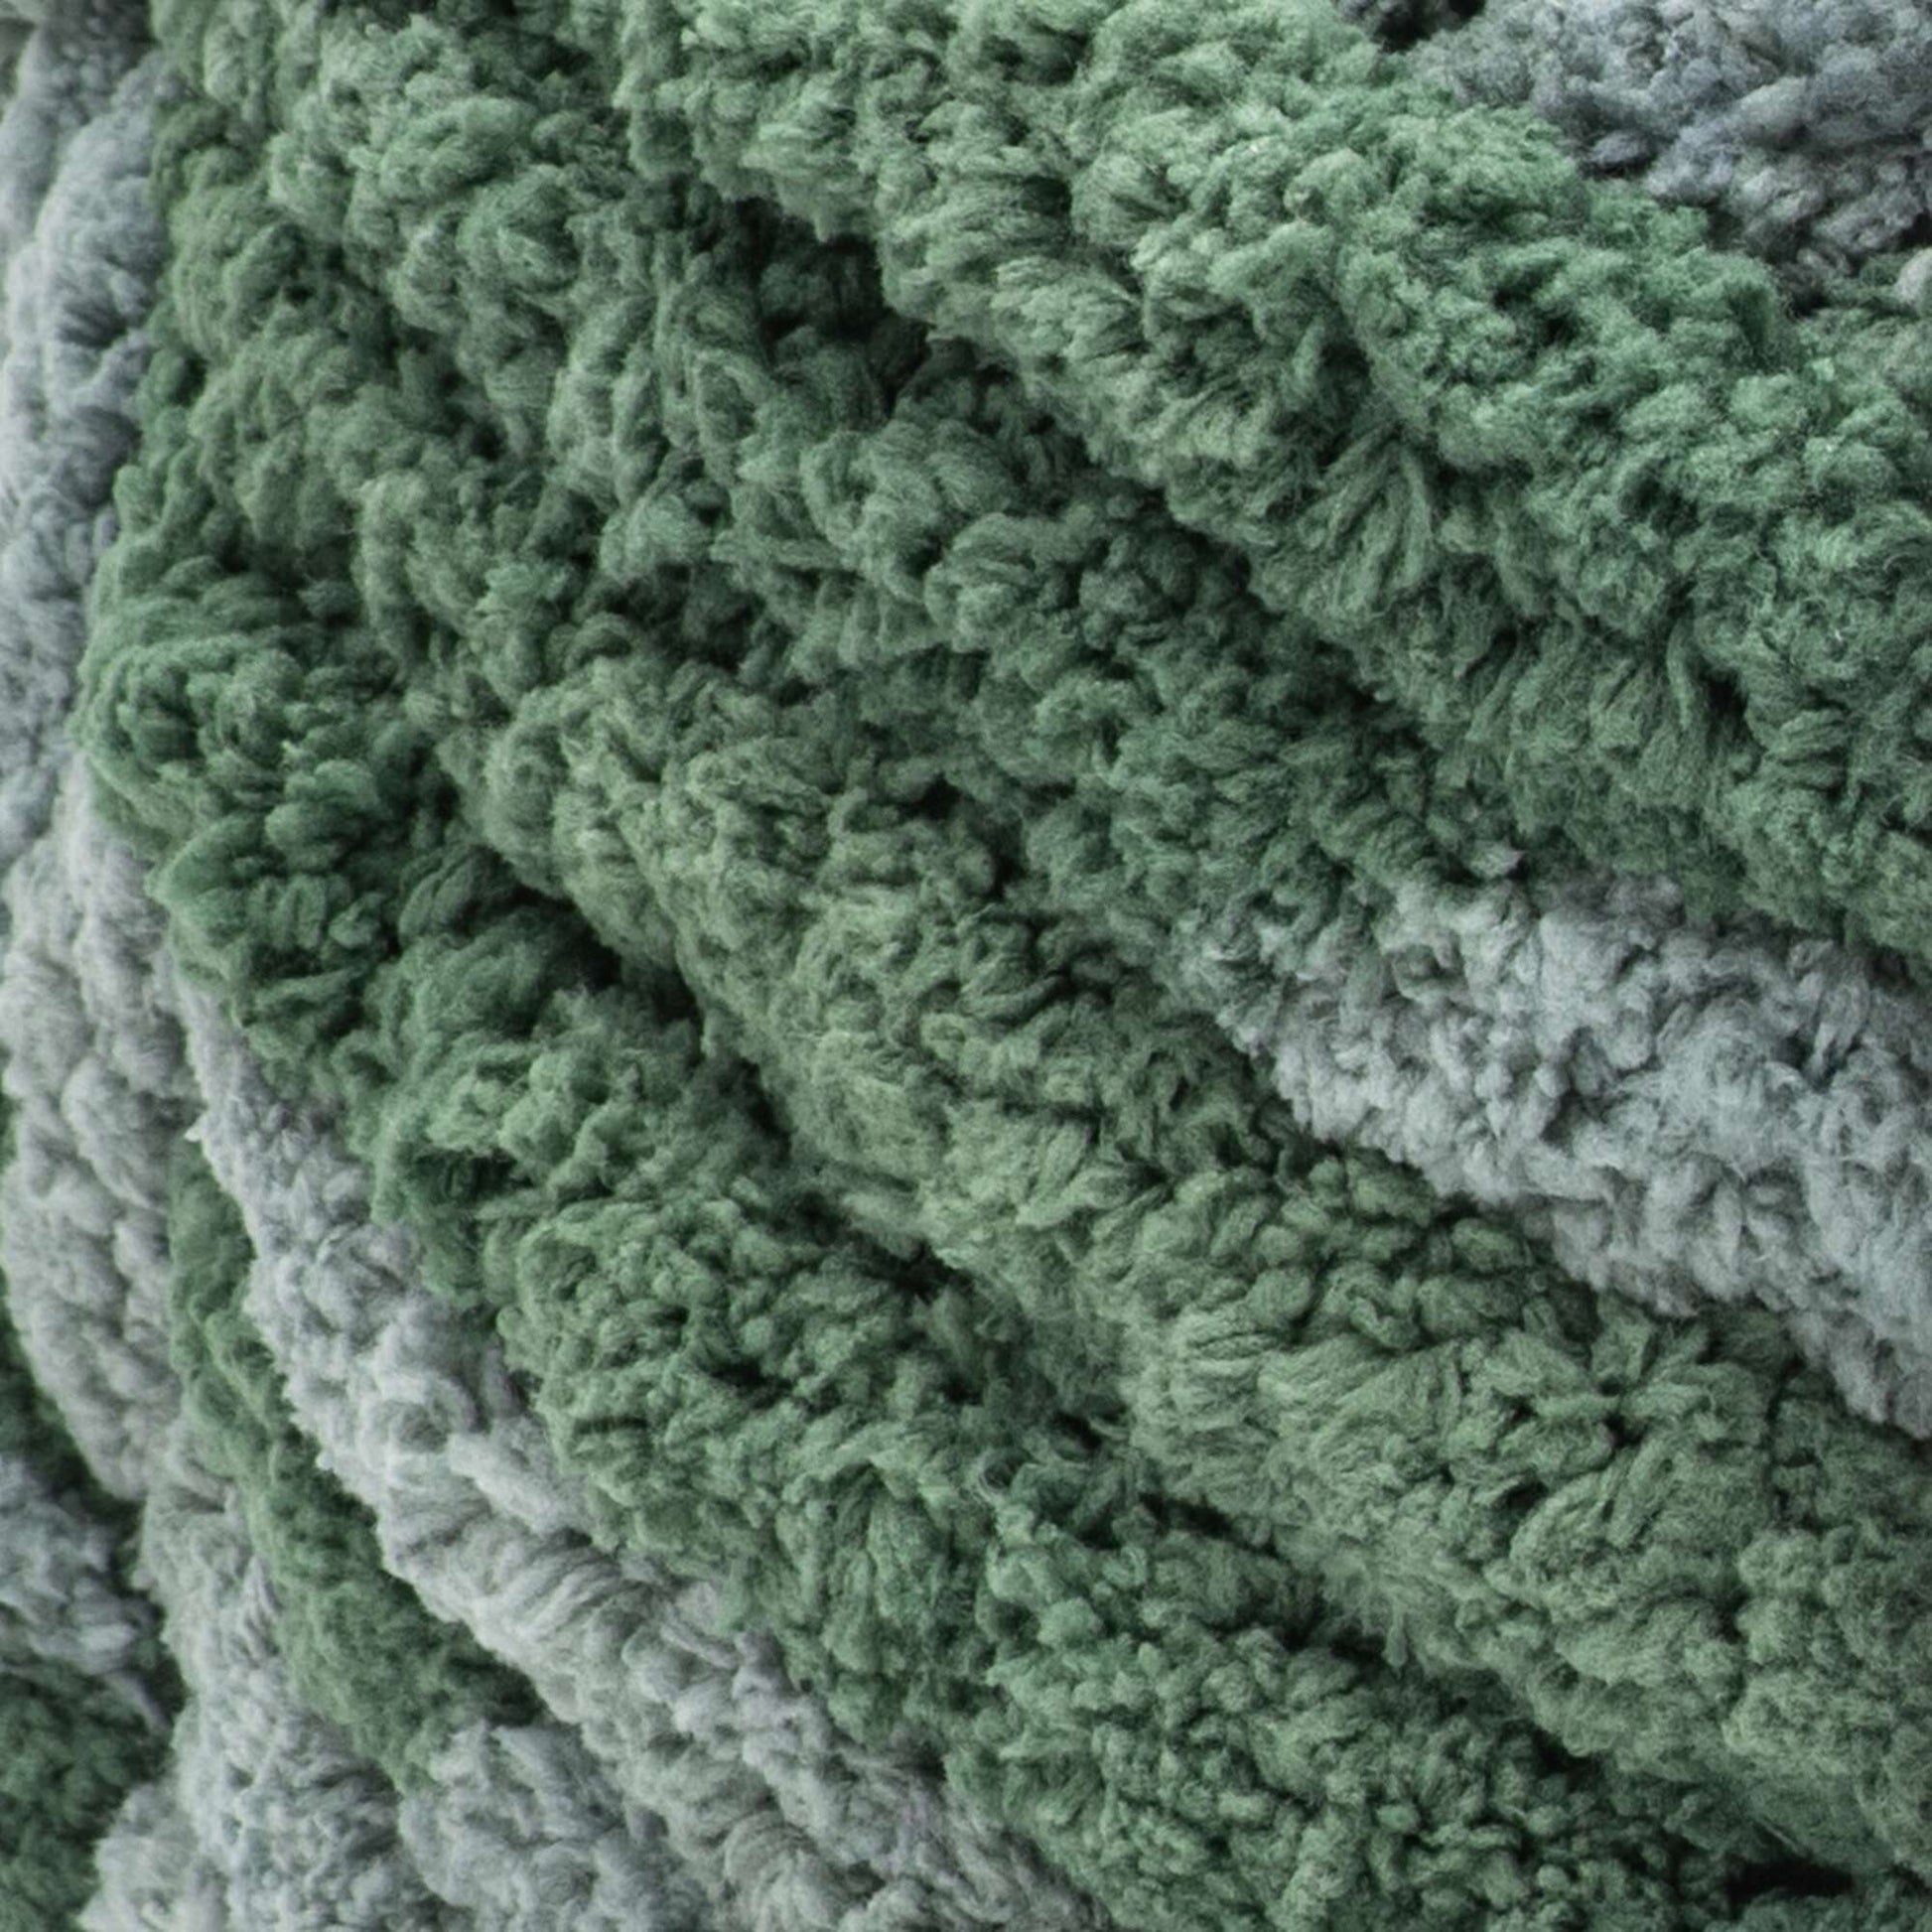 Bernat® Blanket Extra Thick™ #7 Jumbo Polyester Yarn, Pink Dust  21.2oz/600g, 72 Yards 